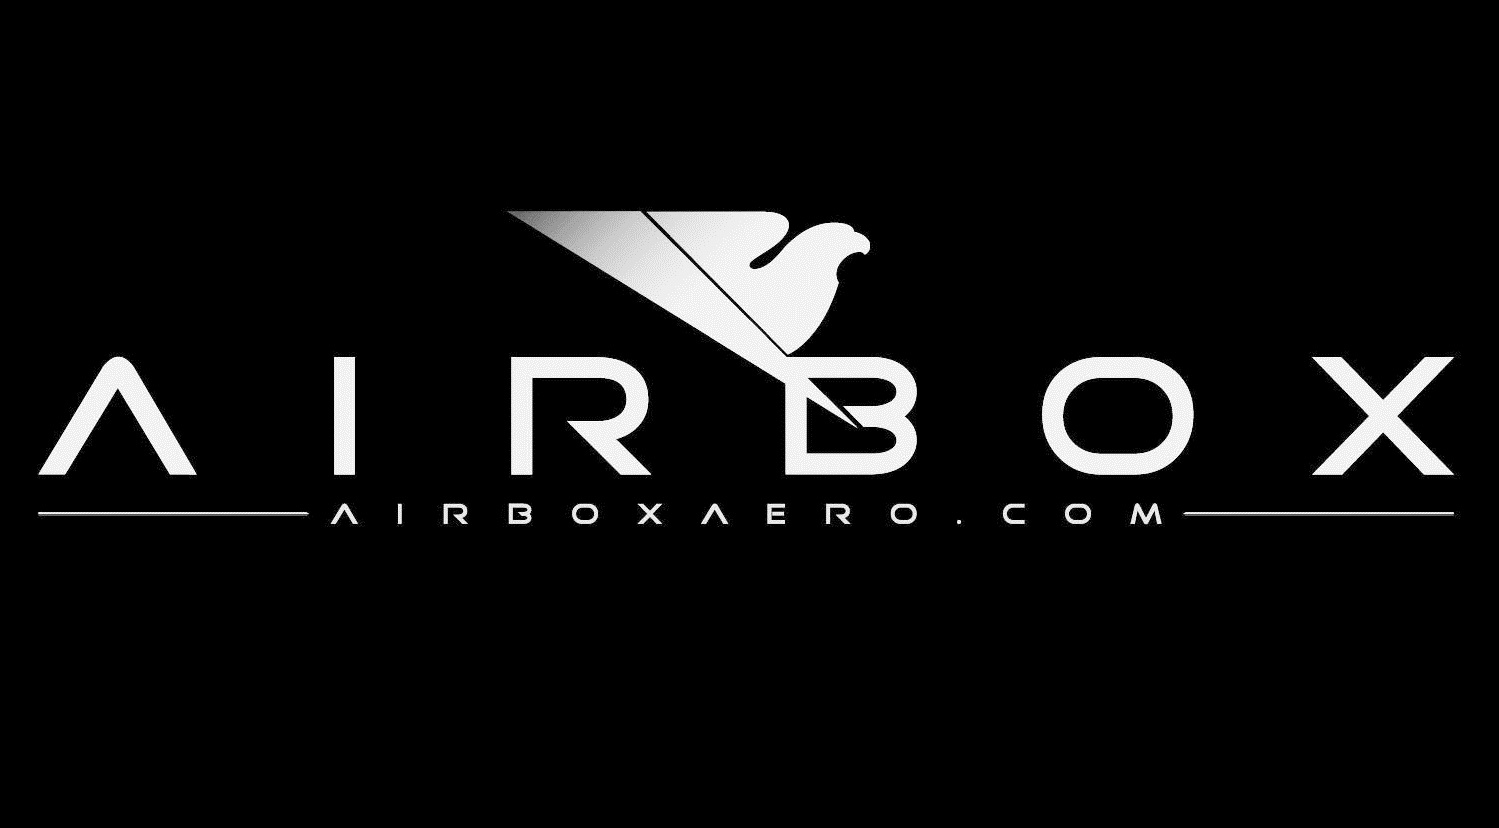 airbox